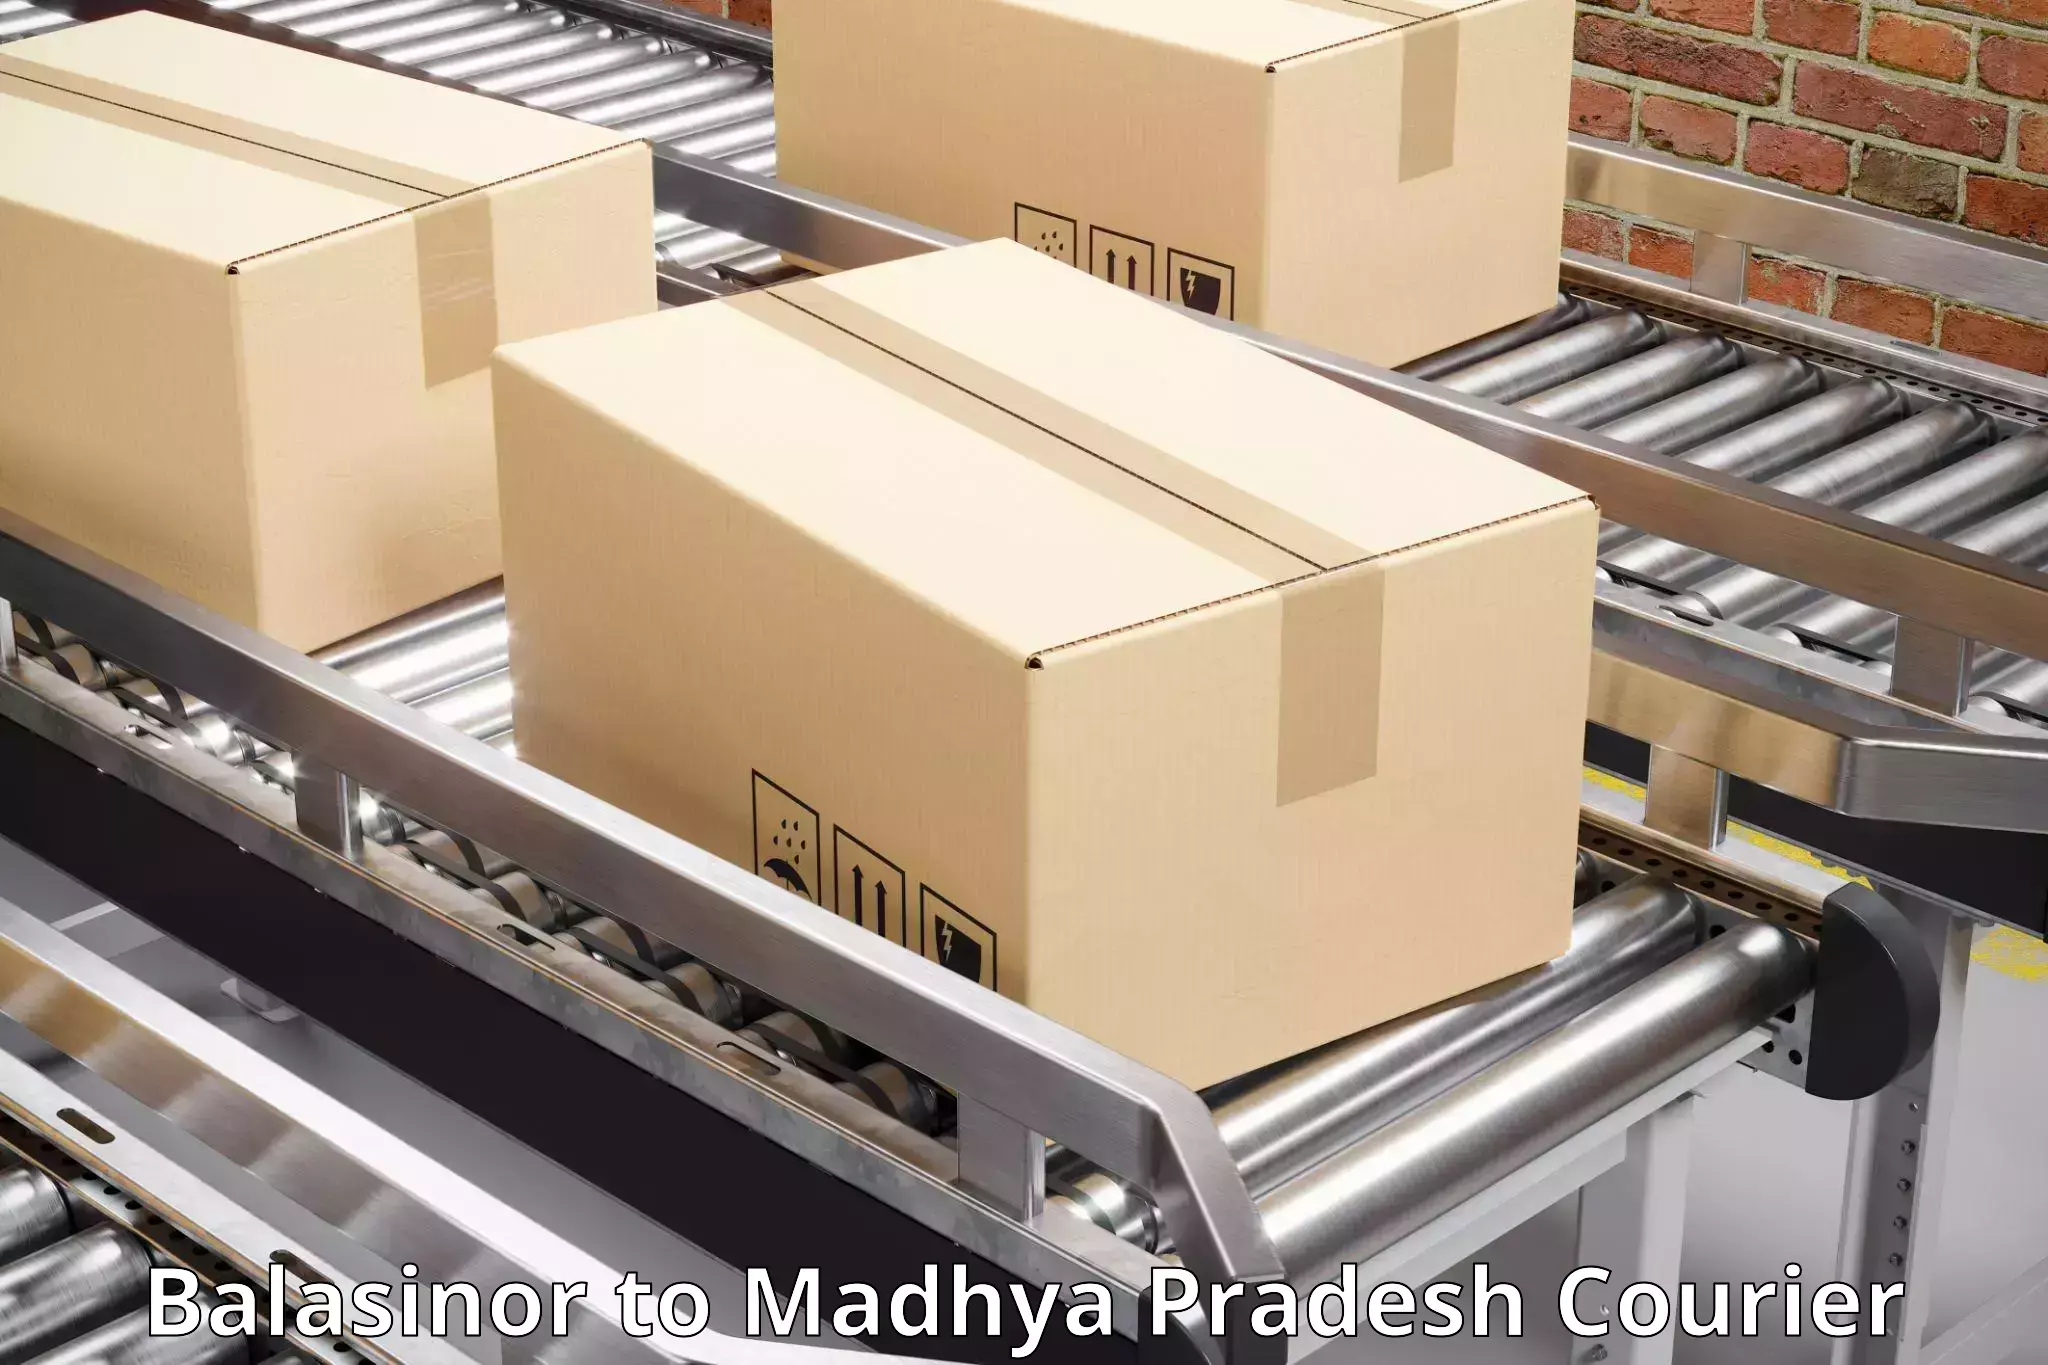 State-of-the-art courier technology Balasinor to Ashoknagar